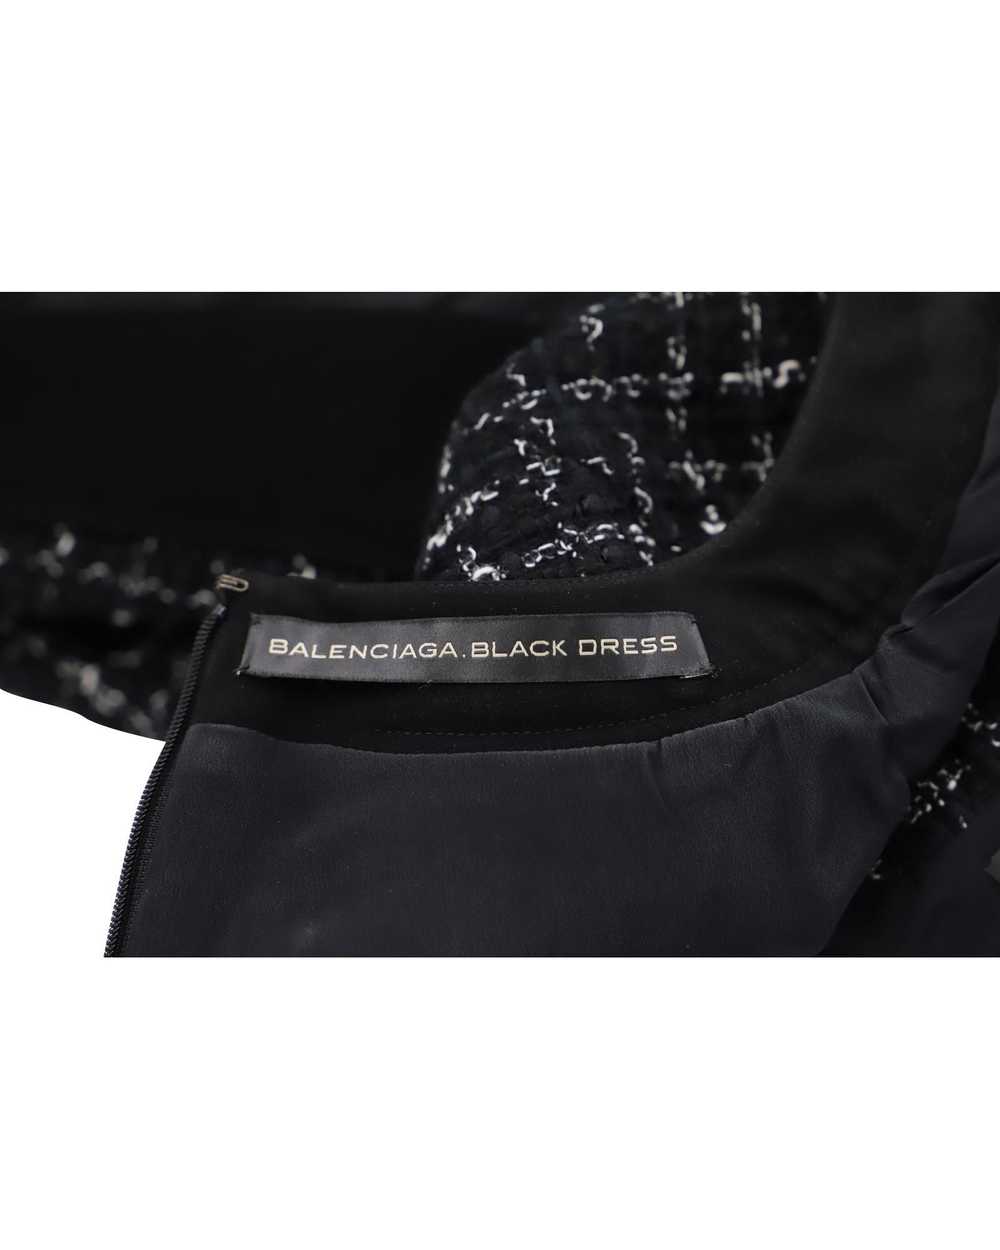 Balenciaga Black Cotton Tweed Shift Dress - image 5